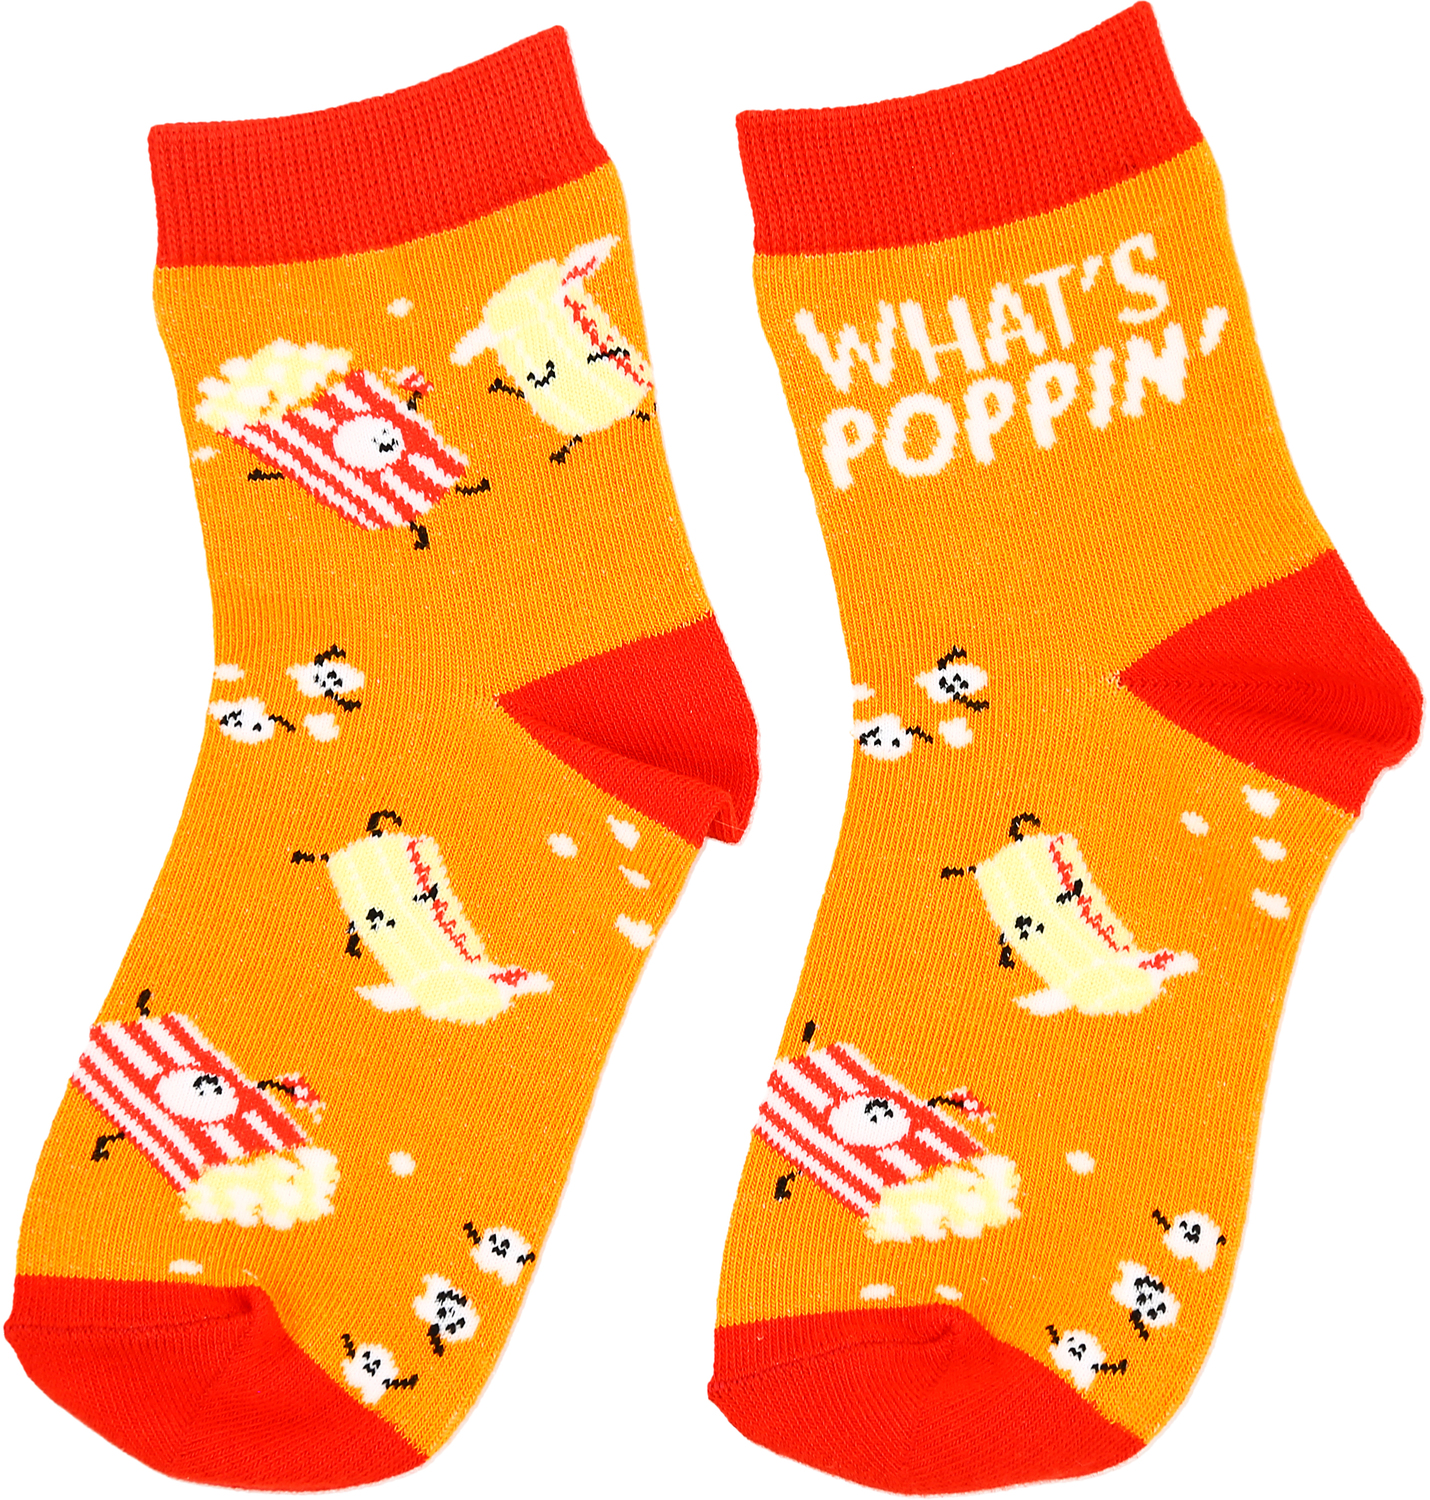 Popcorn by Late Night Snacks - Popcorn - S/M Youth Cotton Blend Crew Socks